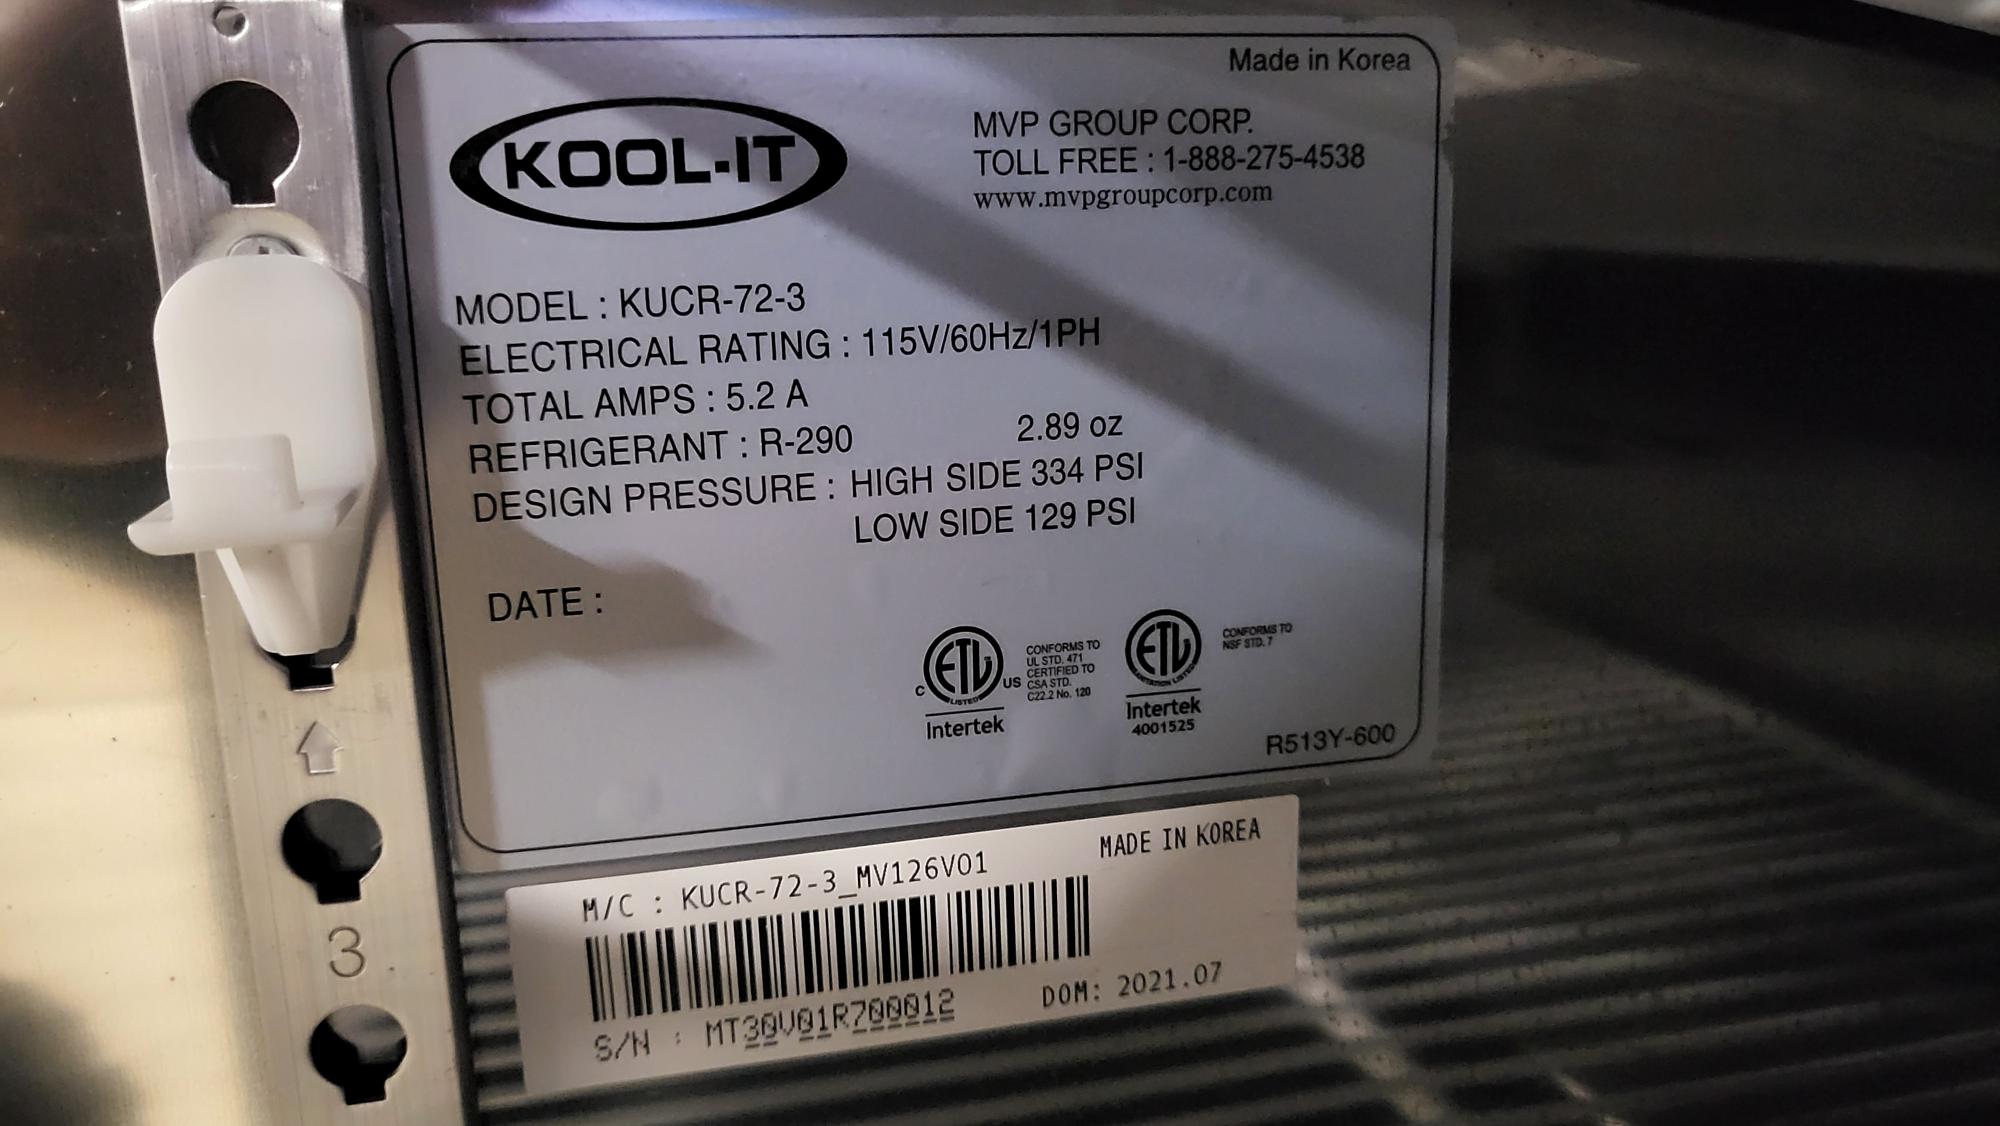 Thumbnail - Kool-It KUCR-72-3 Under counter refrigerator